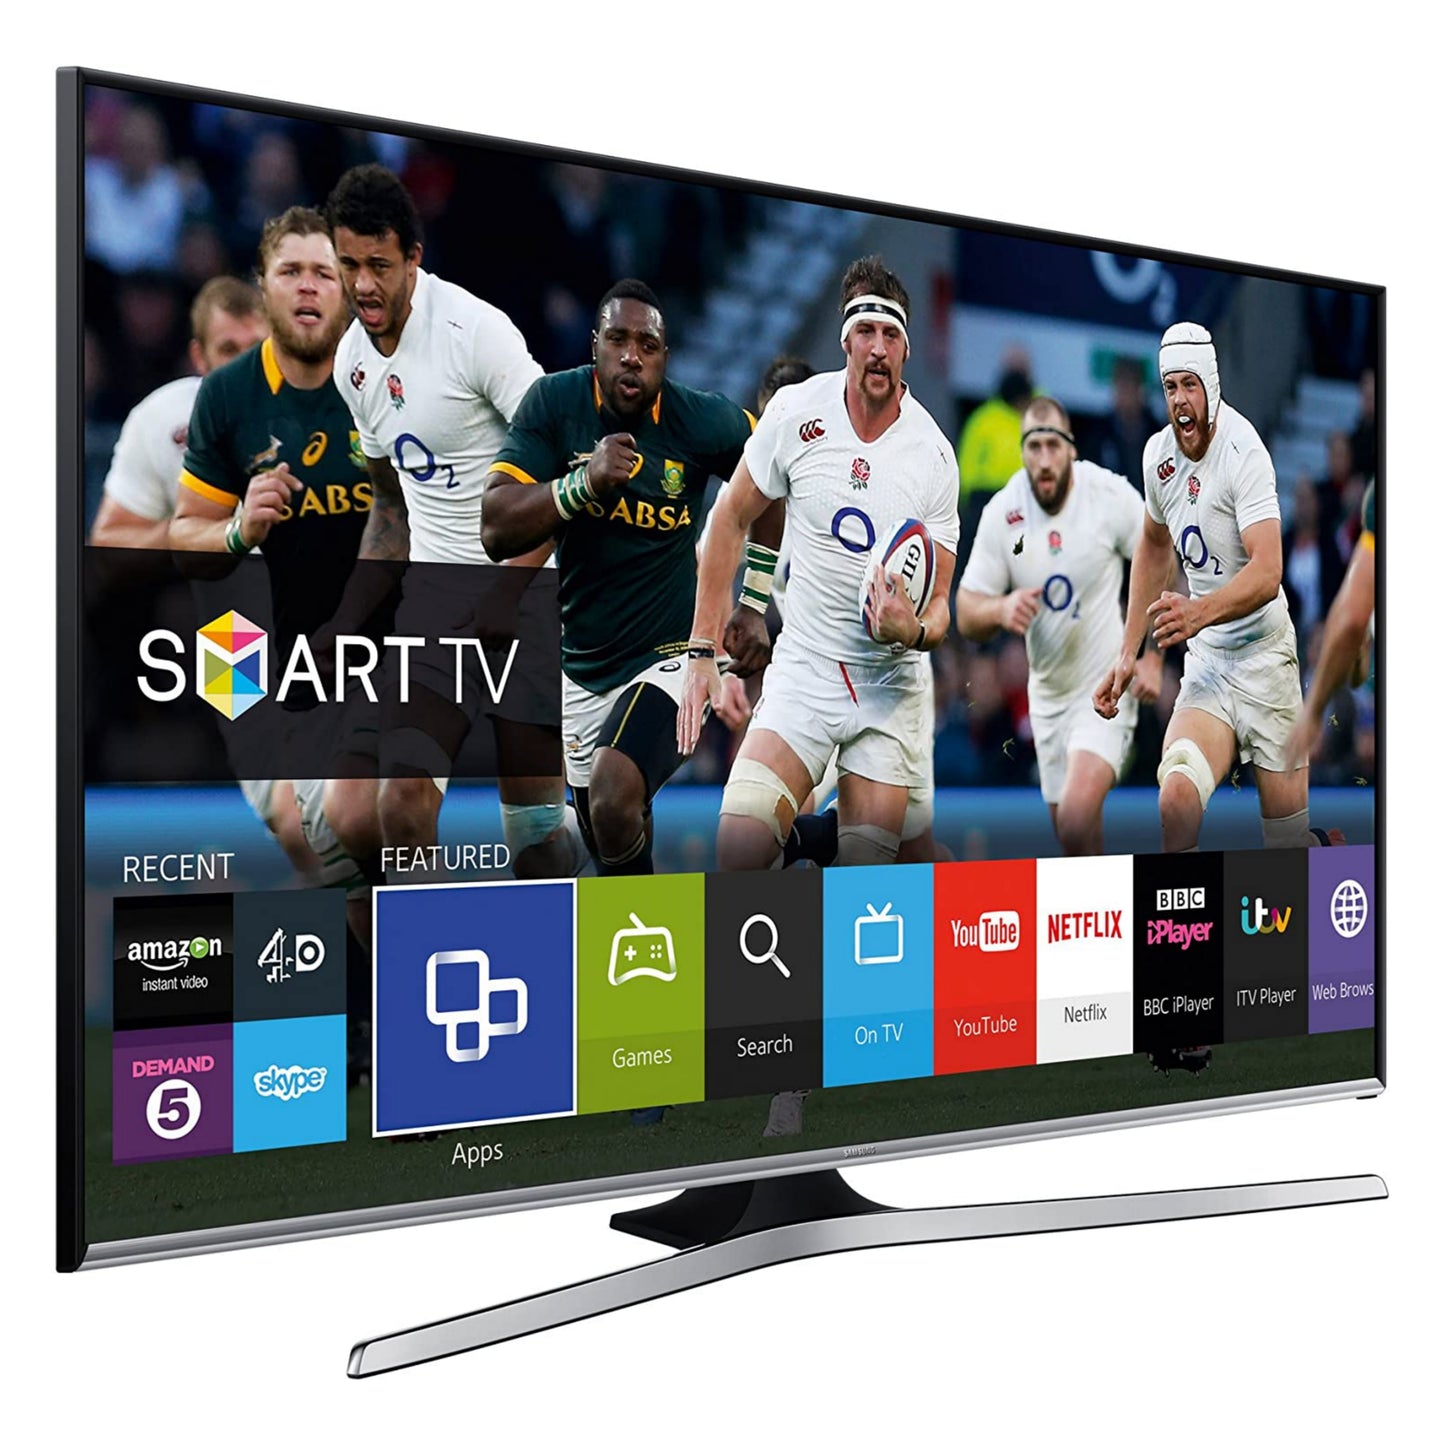 Samsung 43 inch J5500 Series 5 Full Smart FHD LED TV - UK Used